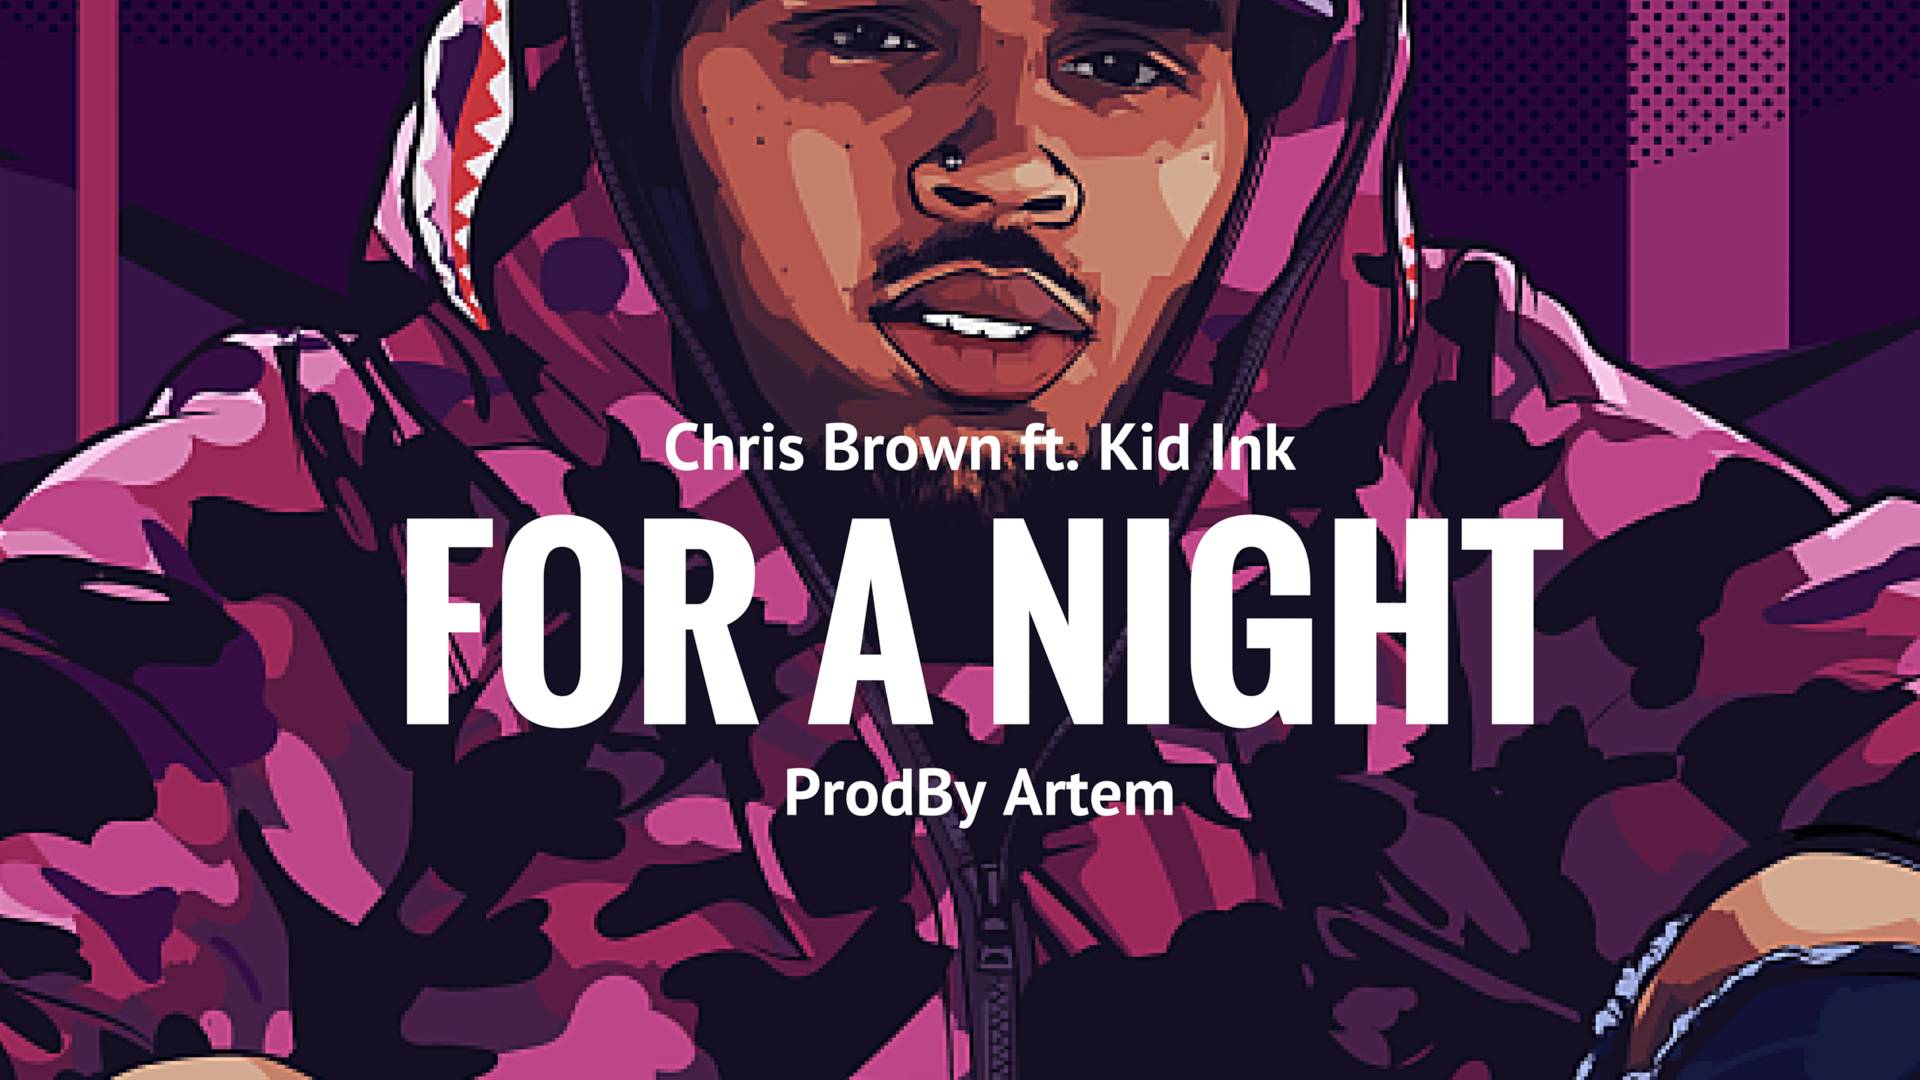 Chris Brown 2018 Wallpaper Free Chris Brown 2018